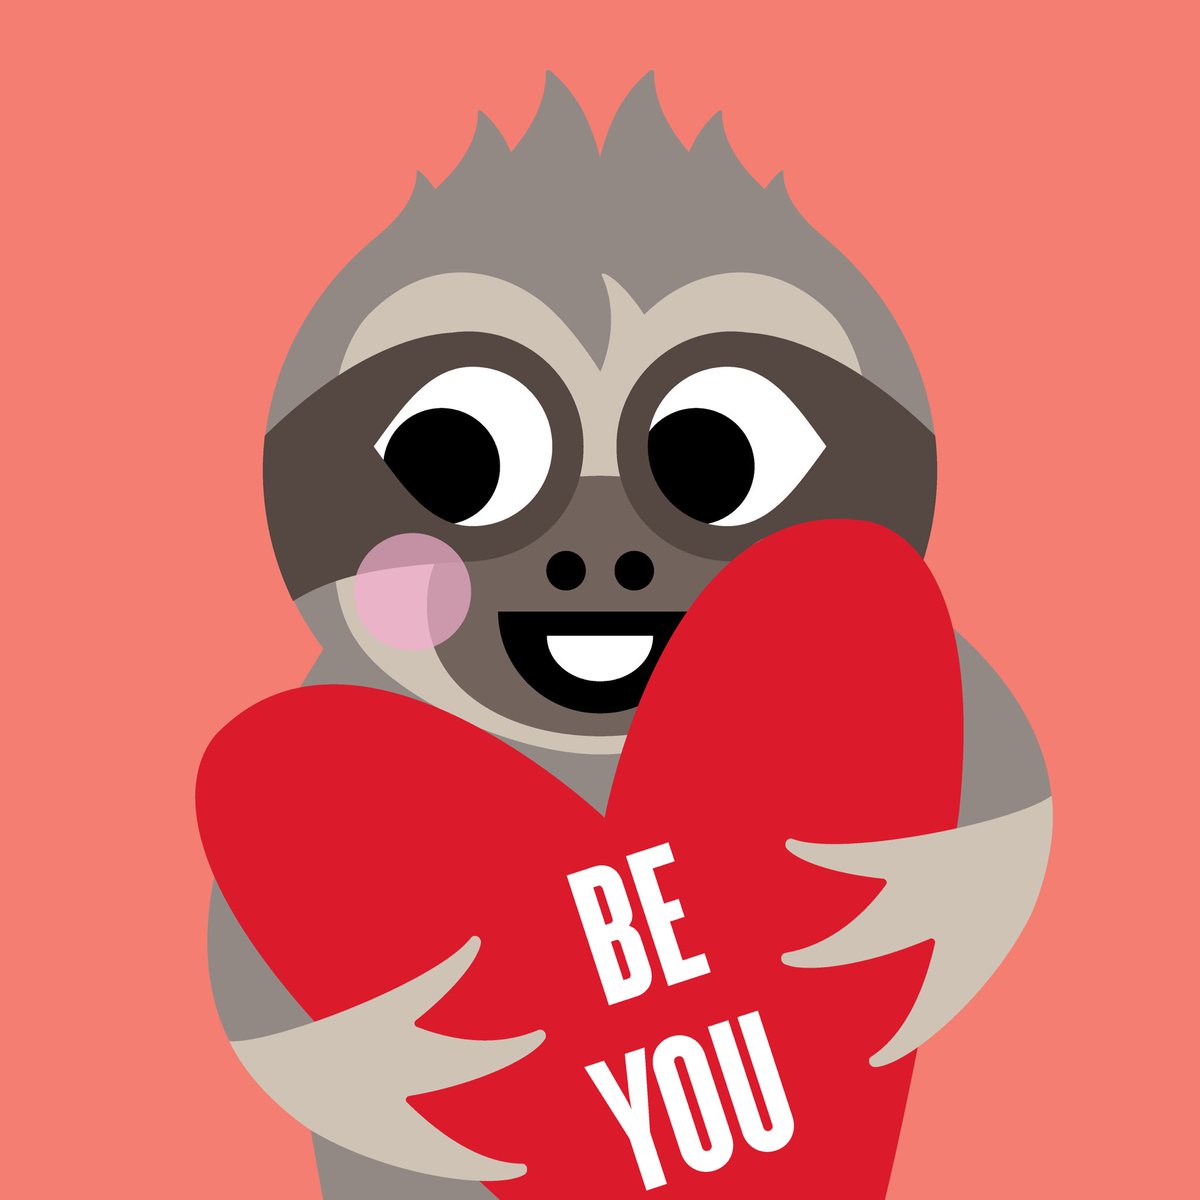 Be you.

#HappyValentinesDay #ValentinesDay #Valentine #sloth #slothlove #smiley #smileythesloth #beyou #14february #heart #InspirationalQuotes #childrensbookillustration #digitalart #quotesforkids #cutesloth #slothlife #sloths #SLOTH #positivevibes #smile #childrensbooks #joy